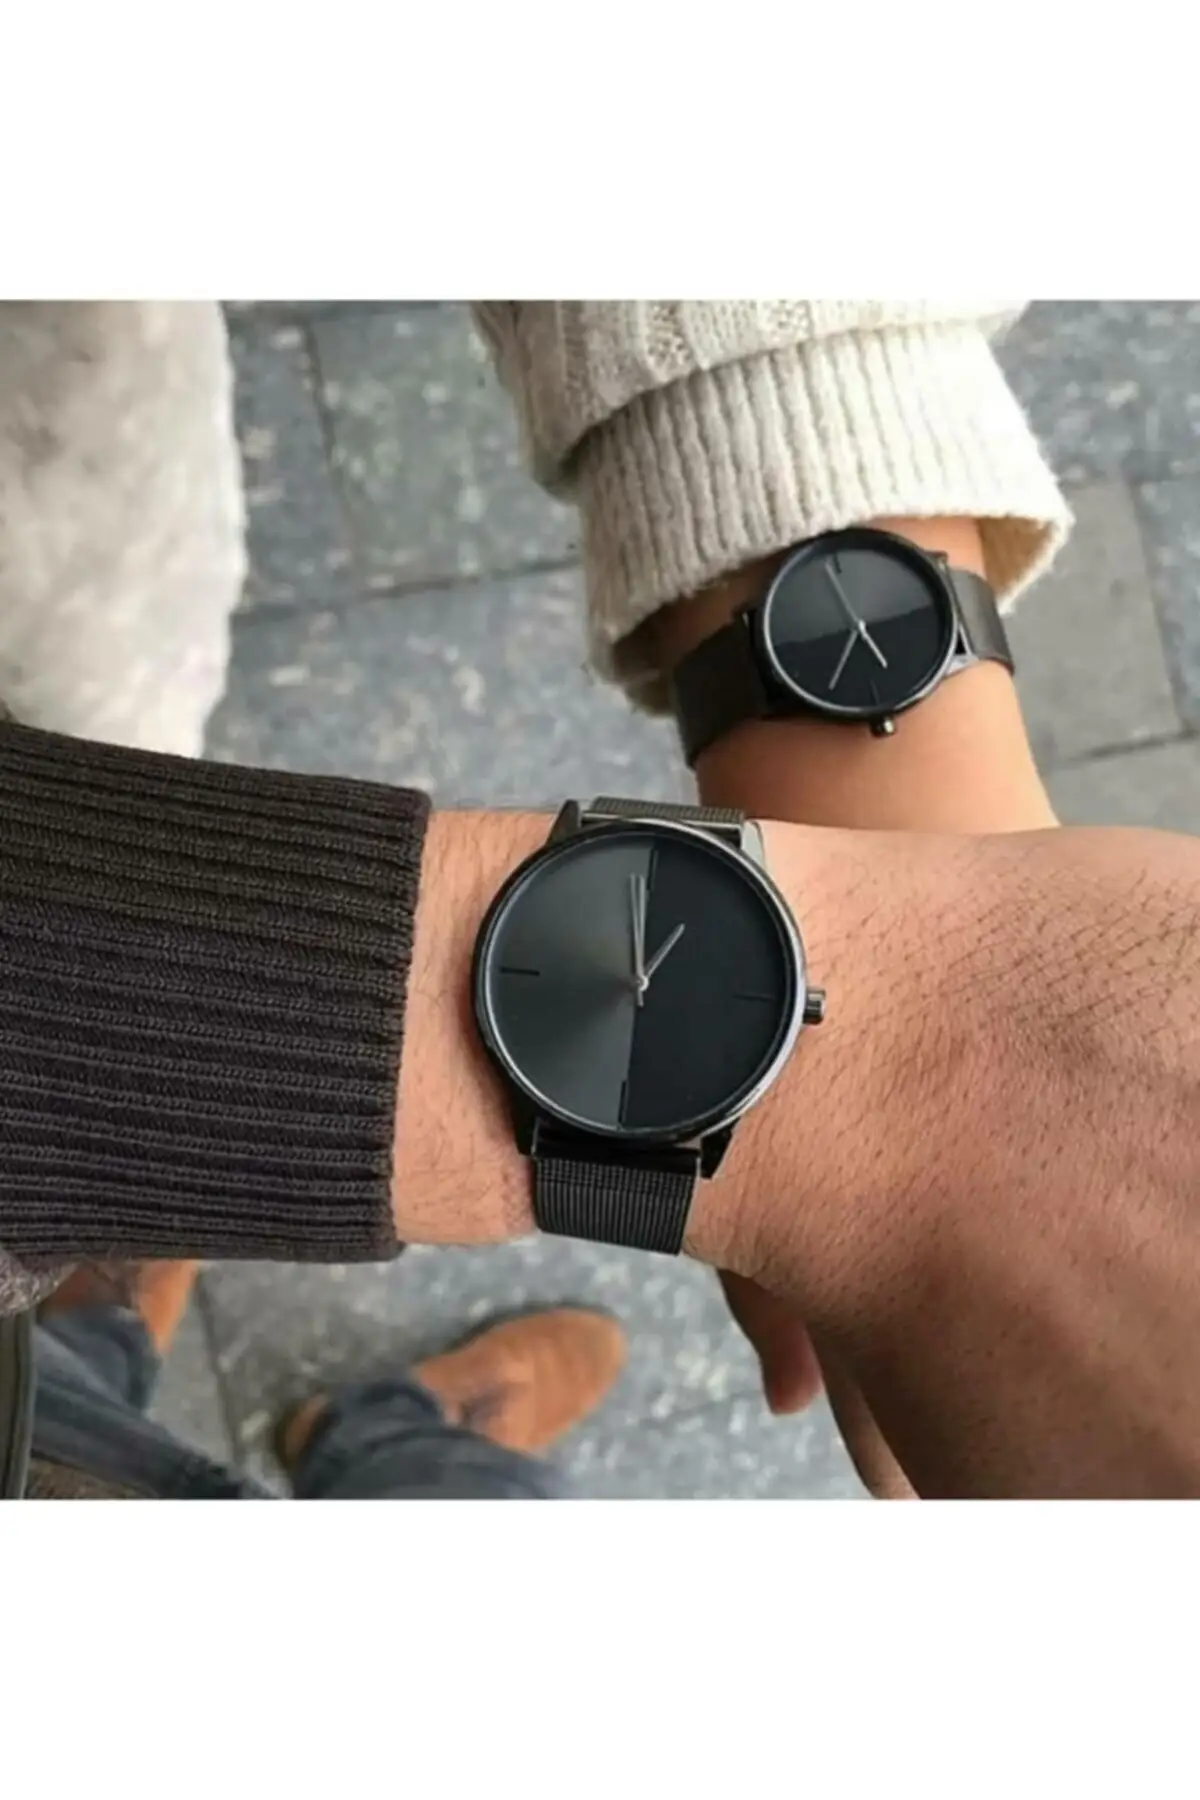 

2022 Watches Dear hour Luxury Fashion Sport Refresh Brands Top Quartz Stylish watch High Quality Premium wristband watch